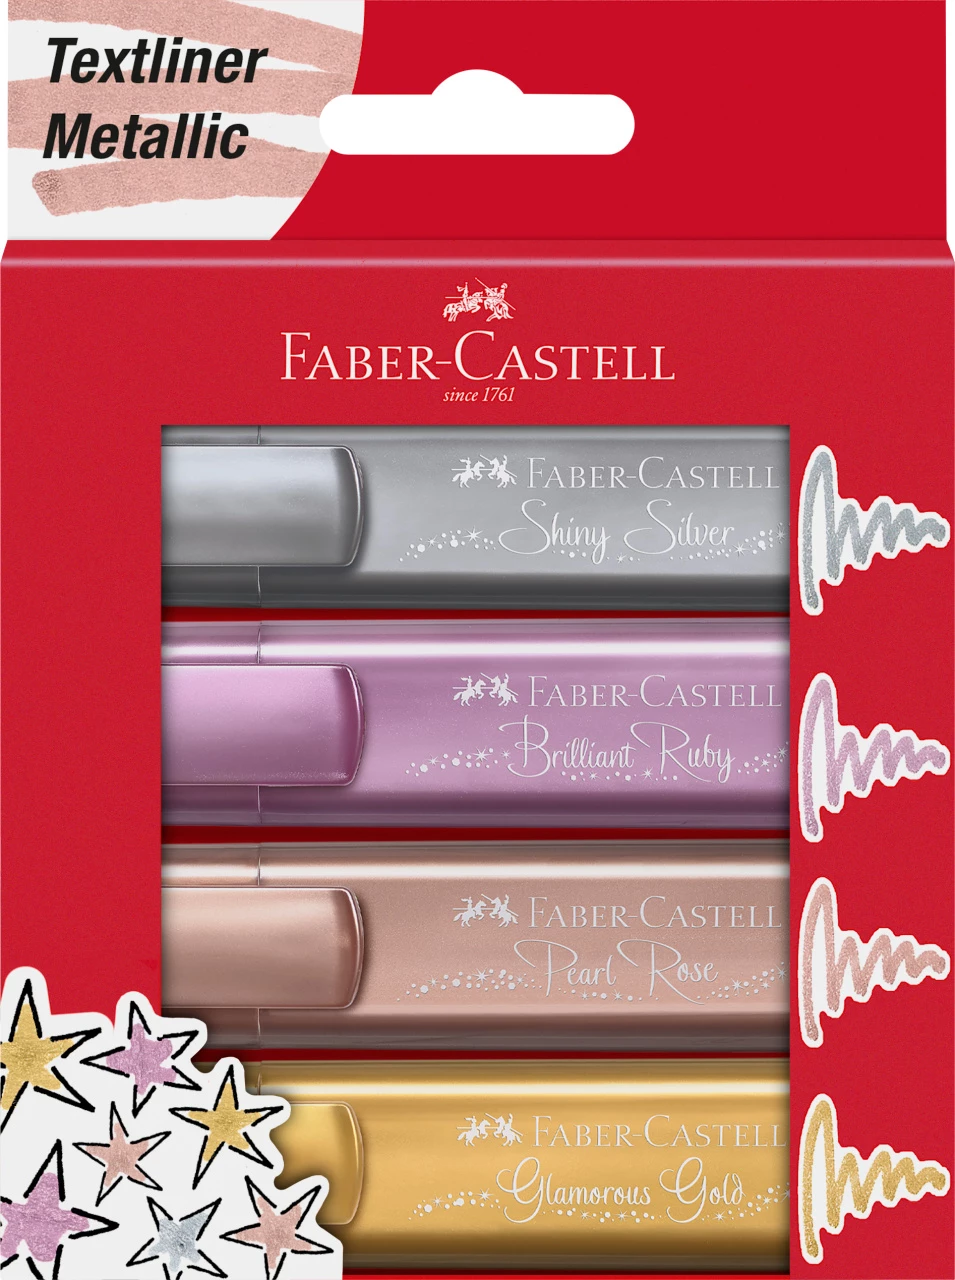 Faber Castel zakreślacze metaliczne komplet 4 kolory